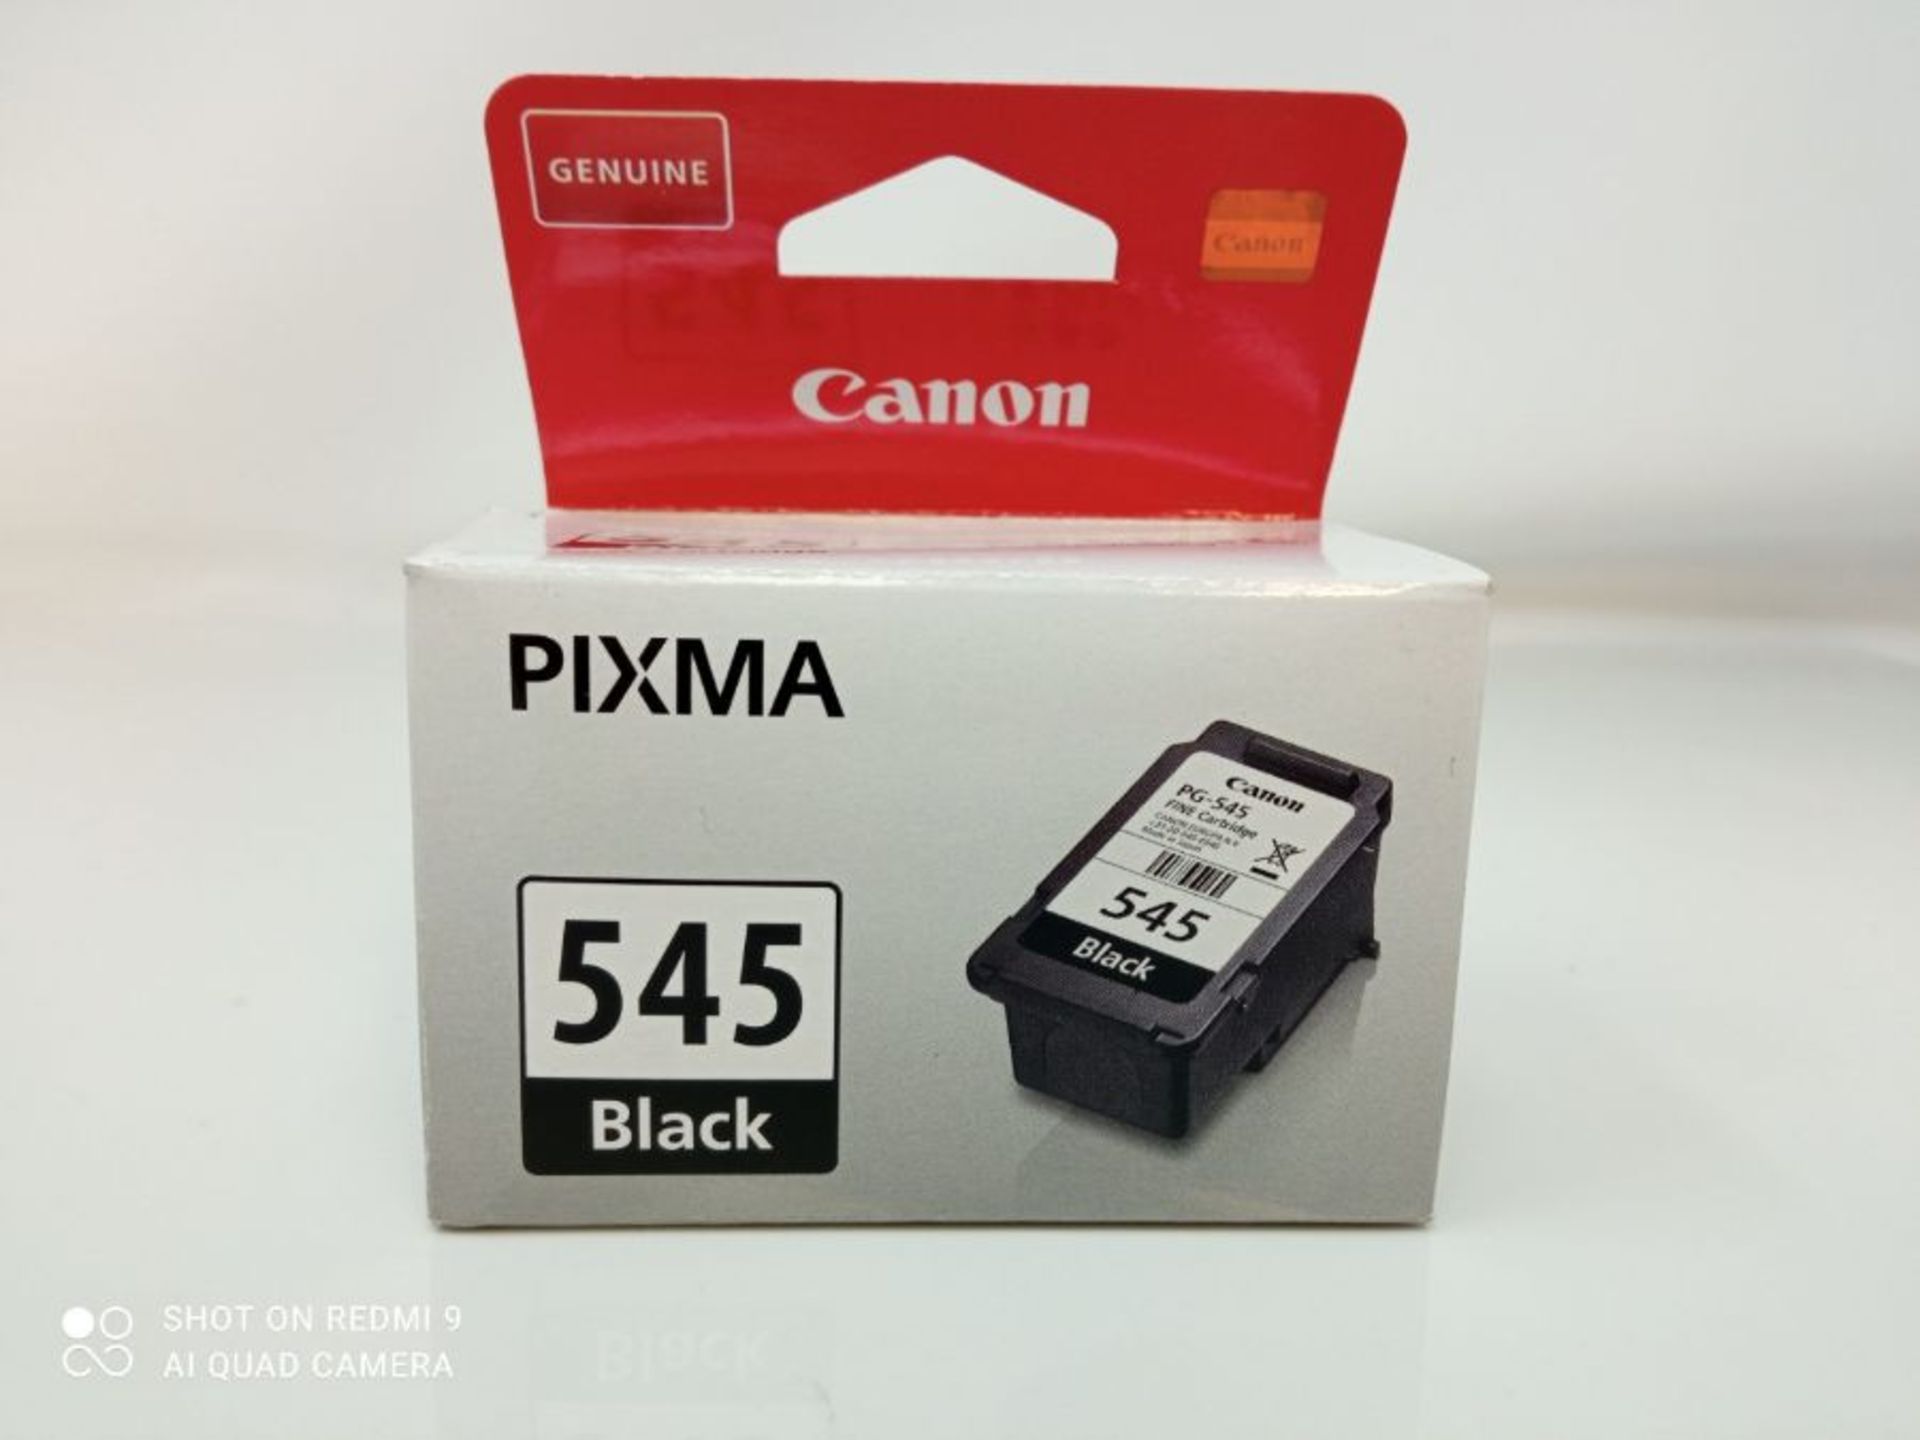 Canon Original PG-545 Black ink cartridge - Image 2 of 3